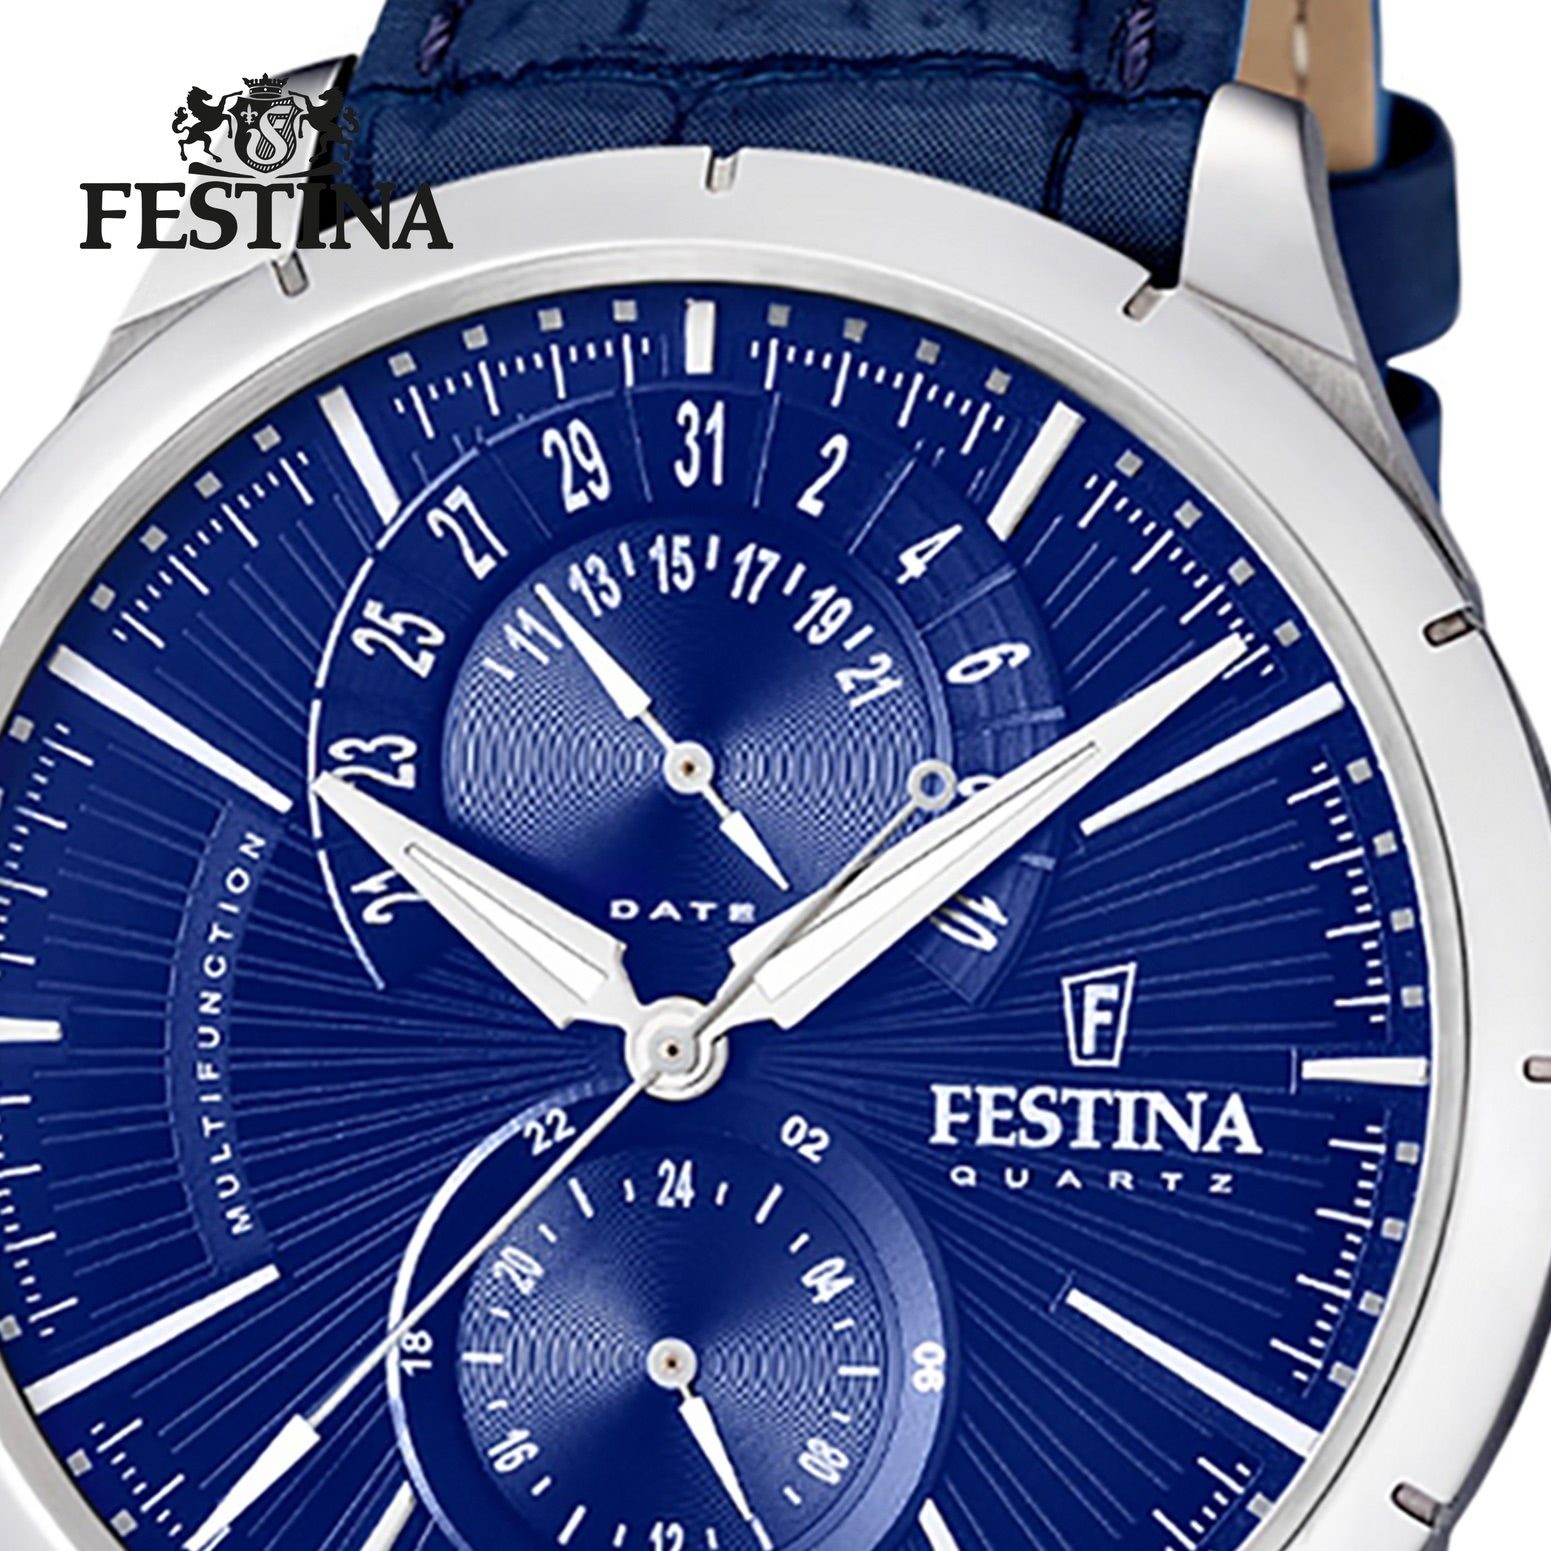 UF16573/X blau Herren Lederarmband Armbanduhr Multifunktionsuhr F16573/X, Uhr rund, Festina schwarz Elegant Festina Herren